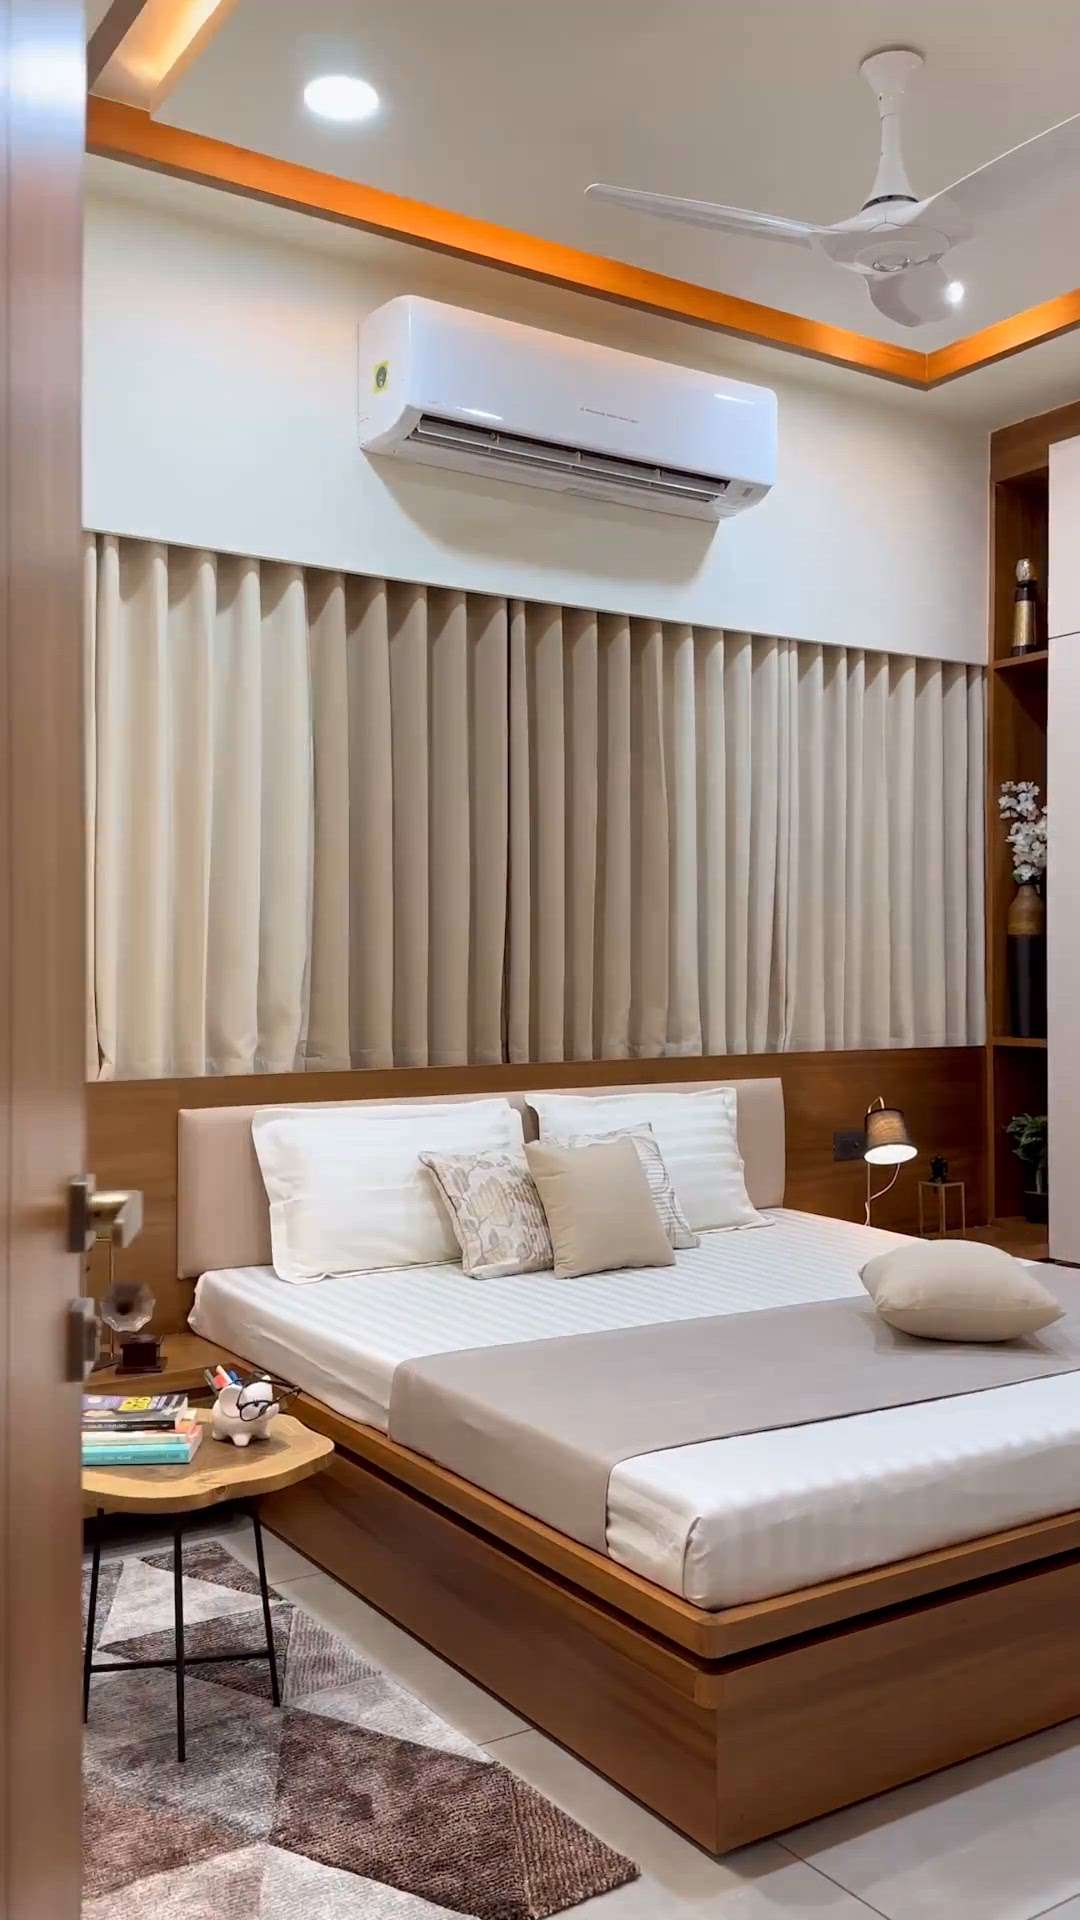 Bedroom Interior Design ❤️
+91 8077017254
 #BedroomDecor  #MasterBedroom  #KingsizeBedroom  #BedroomIdeas  #BedroomIdeas  #BedroomCeilingDesign  #WoodenBeds  #bedroominteriors  #BedroomLighting  #bedroomwardrobe  #bedroomdoors  #InteriorDesigner  #Architectural&Interior  #interiorlovers  #interiordesigners  #interiorstylist  #interiorghaziabad  #Delhihome  #HouseDesigns  #HouseConstruction  #CivilEngineer  #civilcontractors  #civilwork  #civilengineeringworld  #interiorcontractors  #LUXURY_INTERIOR  #gaziabad  #muradnagar   #meerut  #muzaffarnagar  #haridwar  #roorkee  #saharanpur  #hapur  #bulandshahar  #agra  #mathura  #chandigarh  #gurugram  #noida  #greaternoida  #faridabad  #LUXURY_INTERIOR